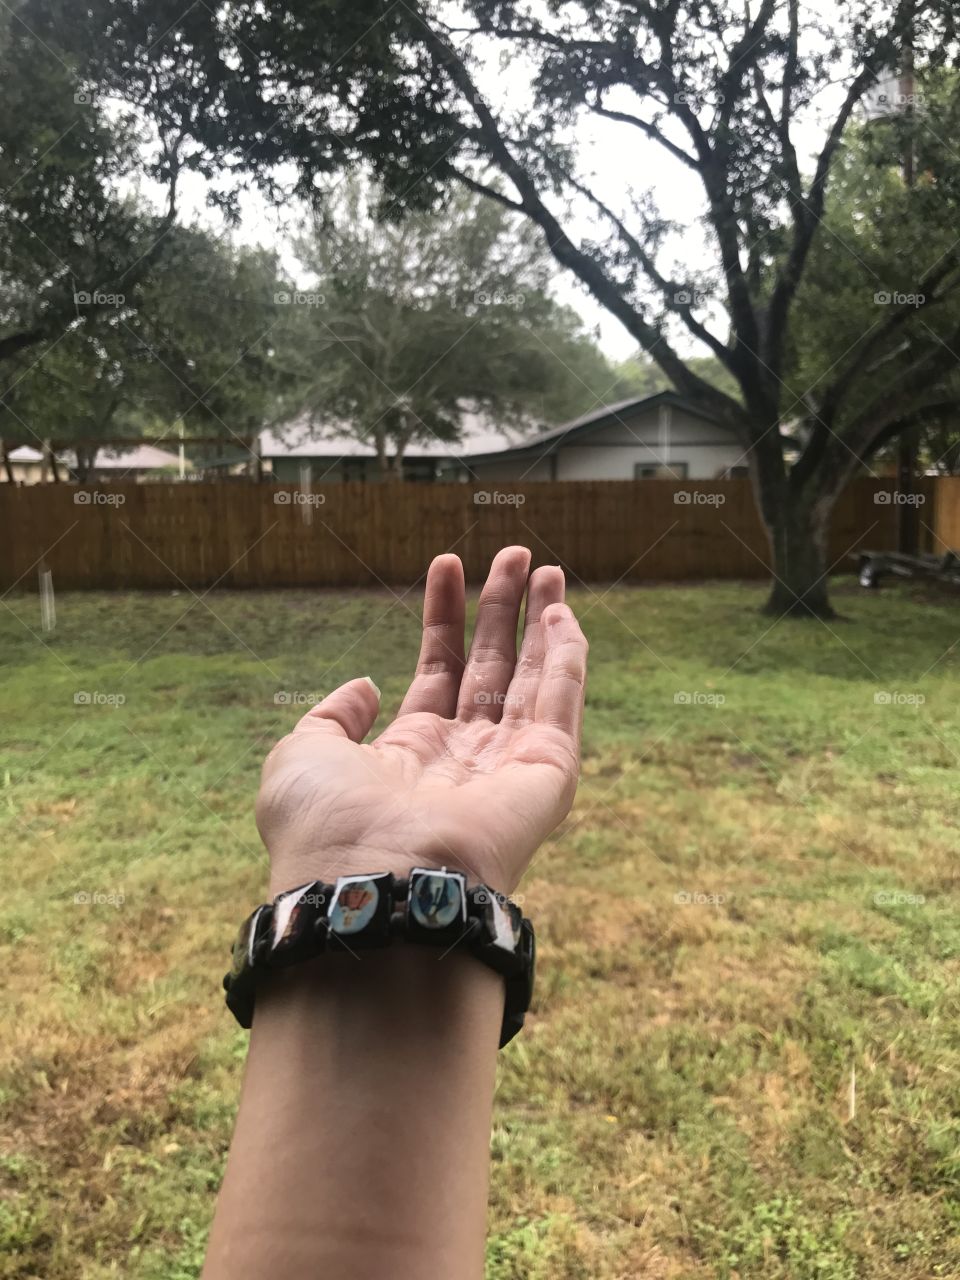 Touching the rain 